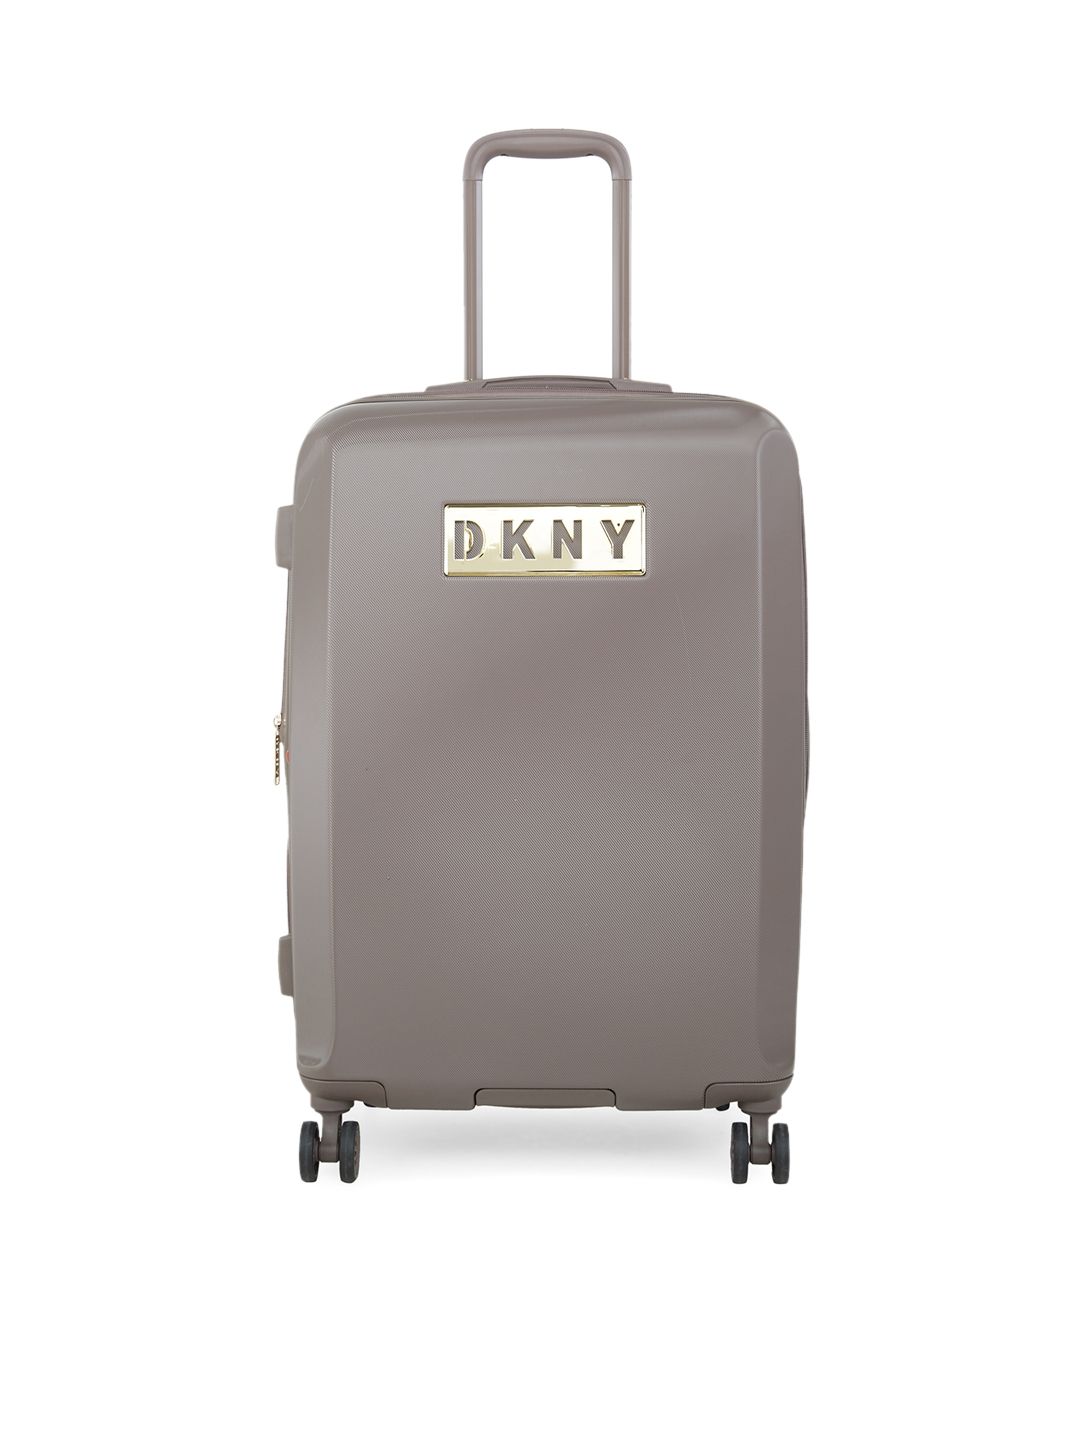 DKNY Alchemy Range Bronze Hard Medium Suitcase Price in India